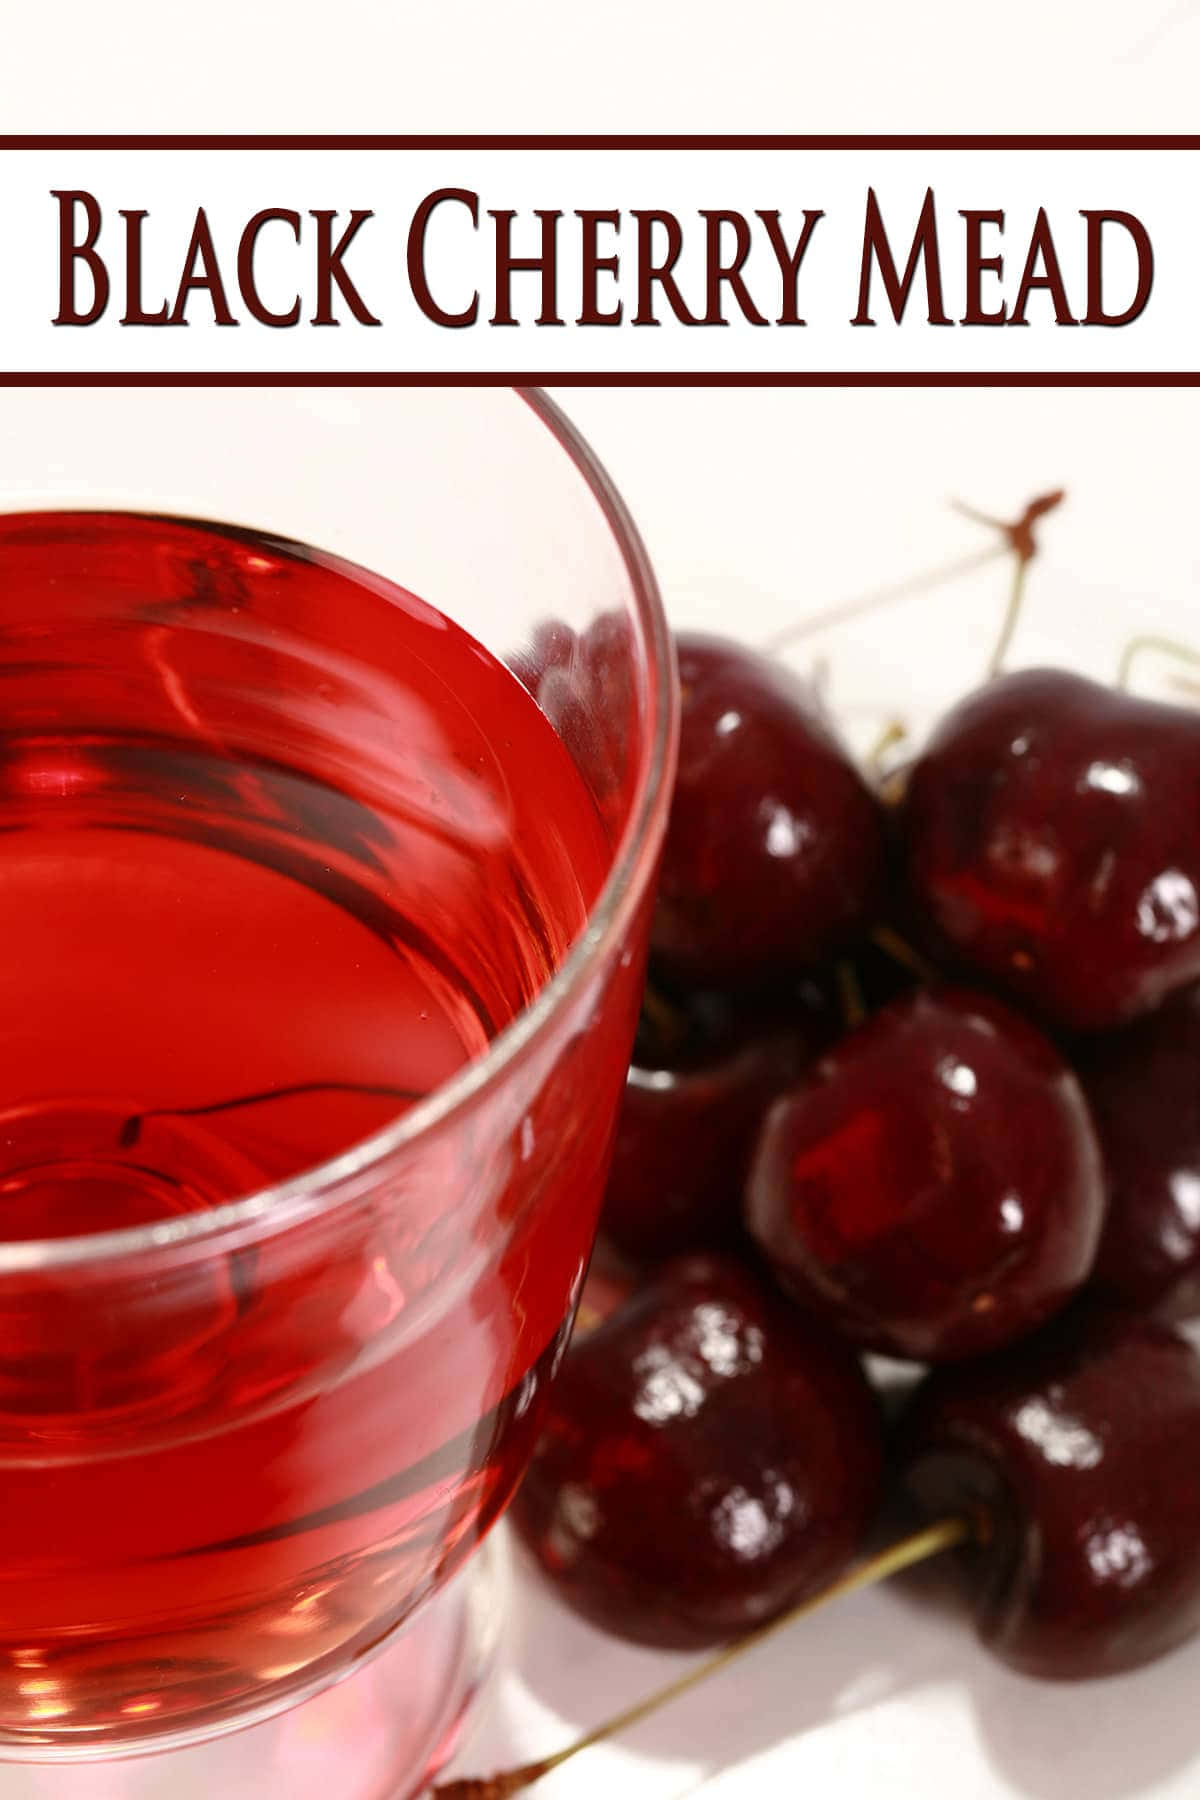 Brighten up your day with juicy, ripe black cherries! Wallpaper